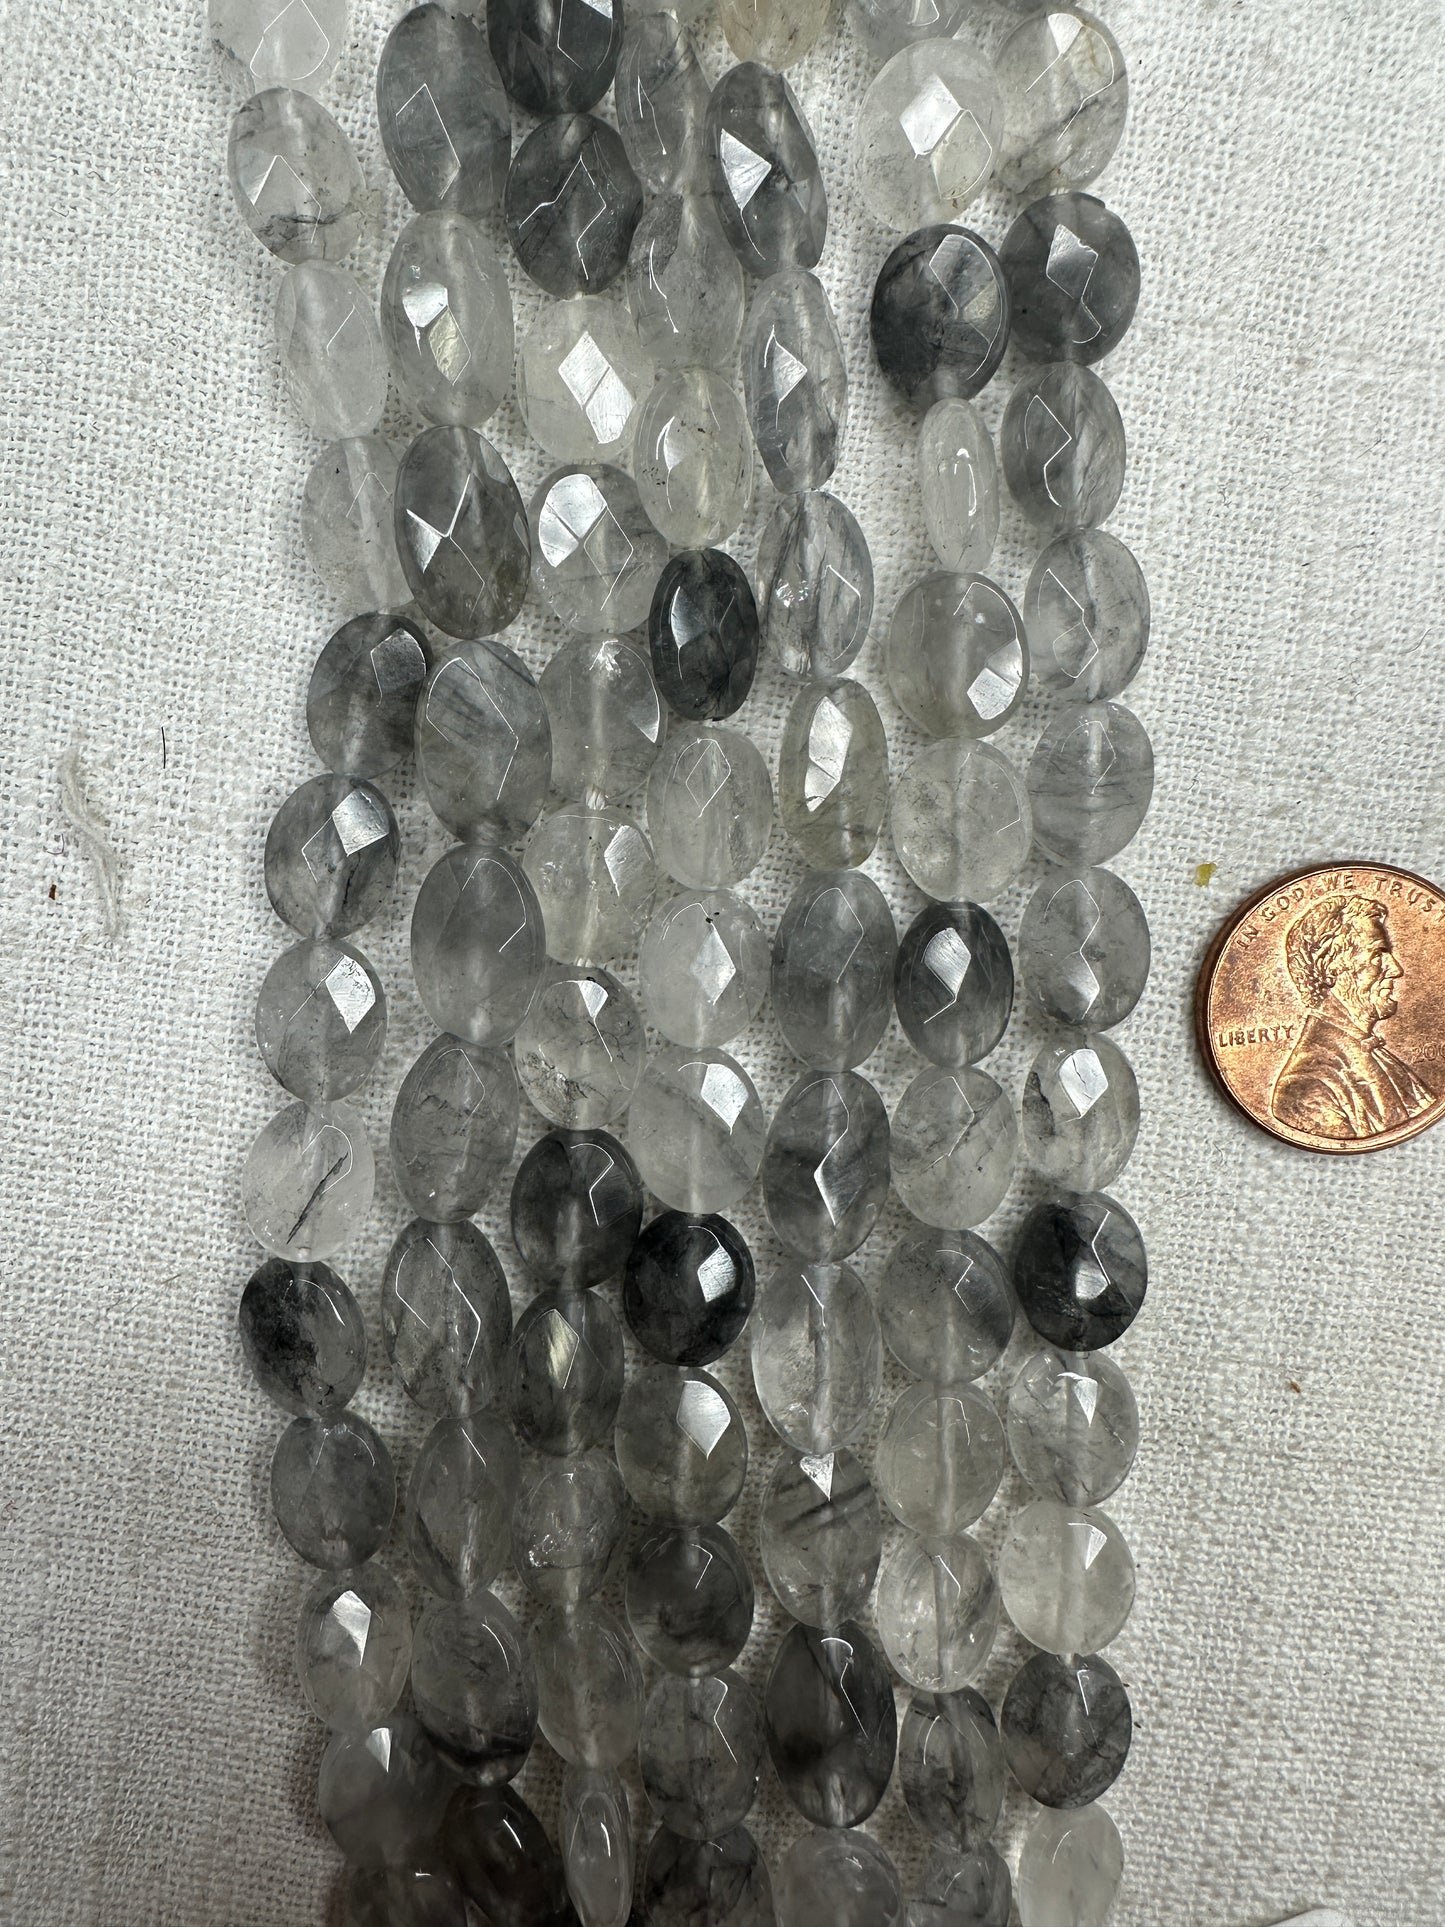 brazilian cloudy quartz 8mmx10mm oval shape faceted AAA grade 15.5"strand